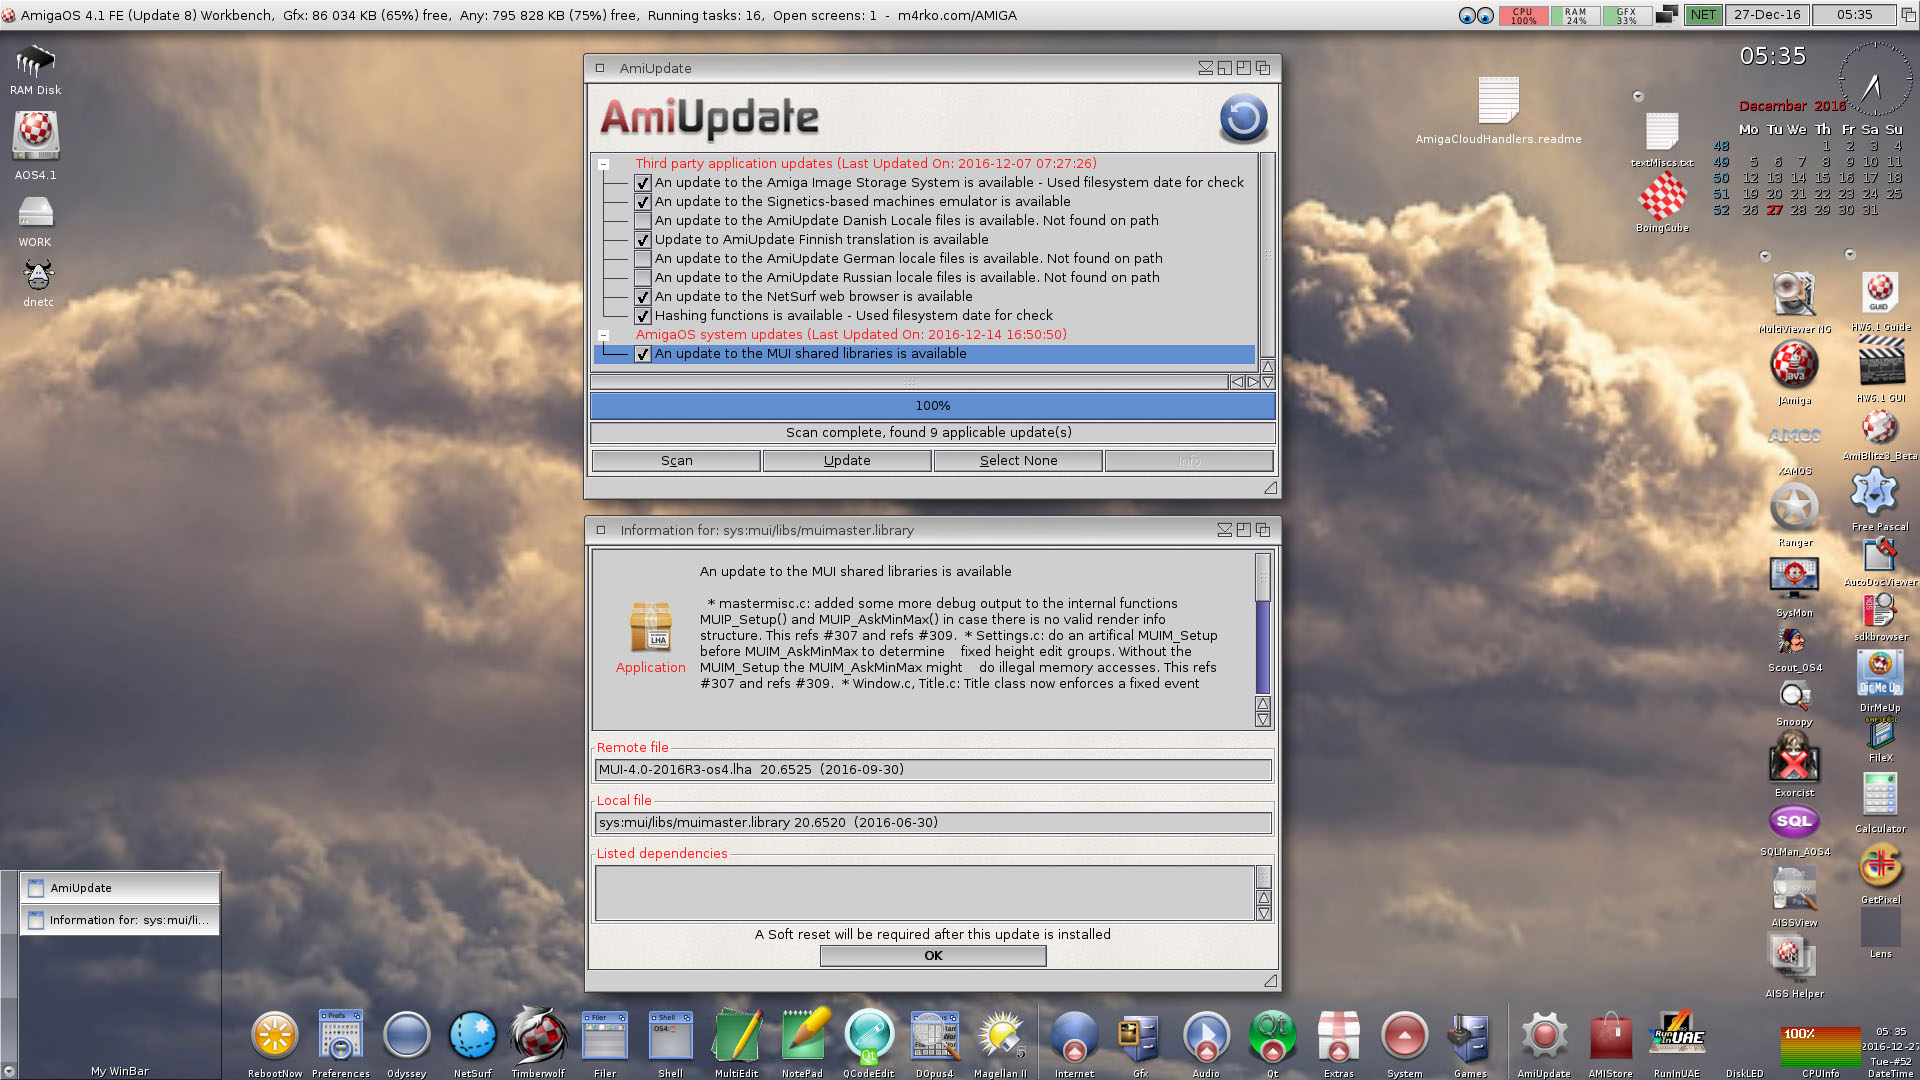 Software updates on AmiUpdate